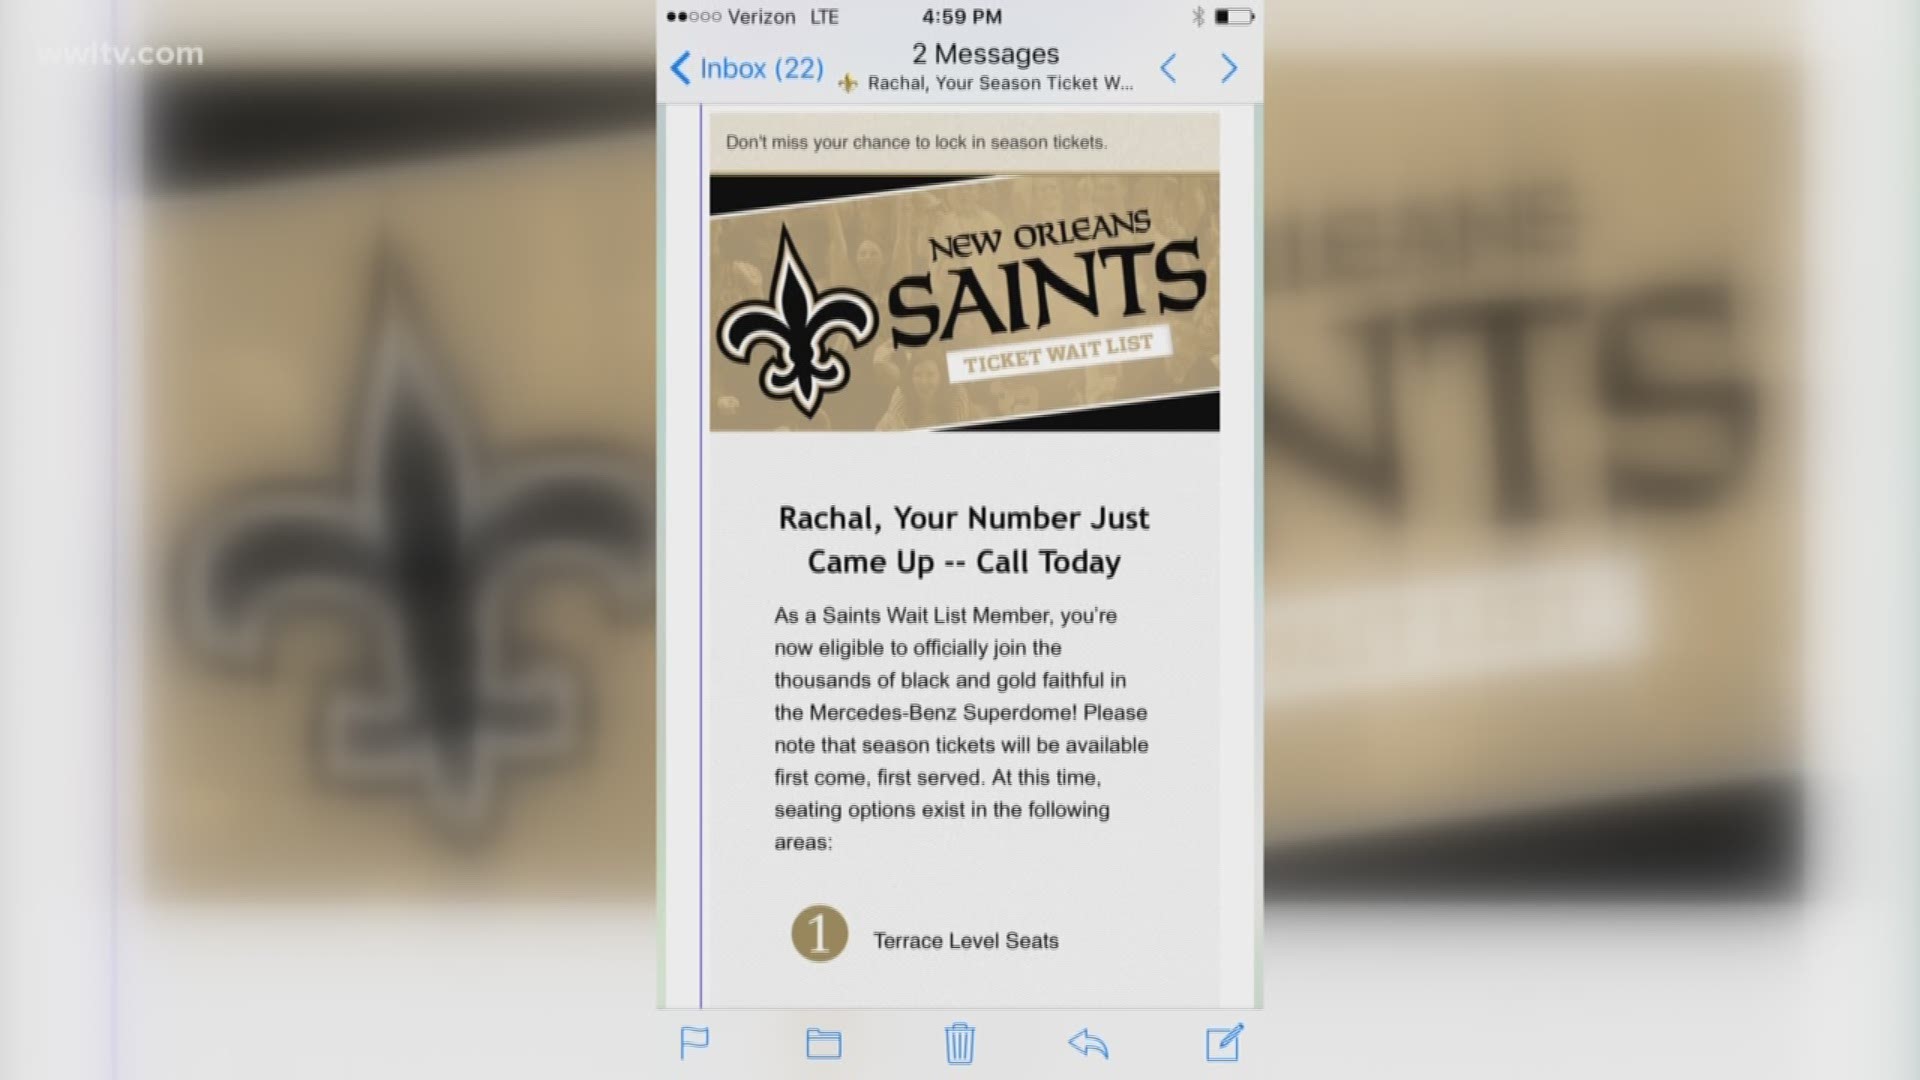 Man calls Saints 200 times after season ticket misfire